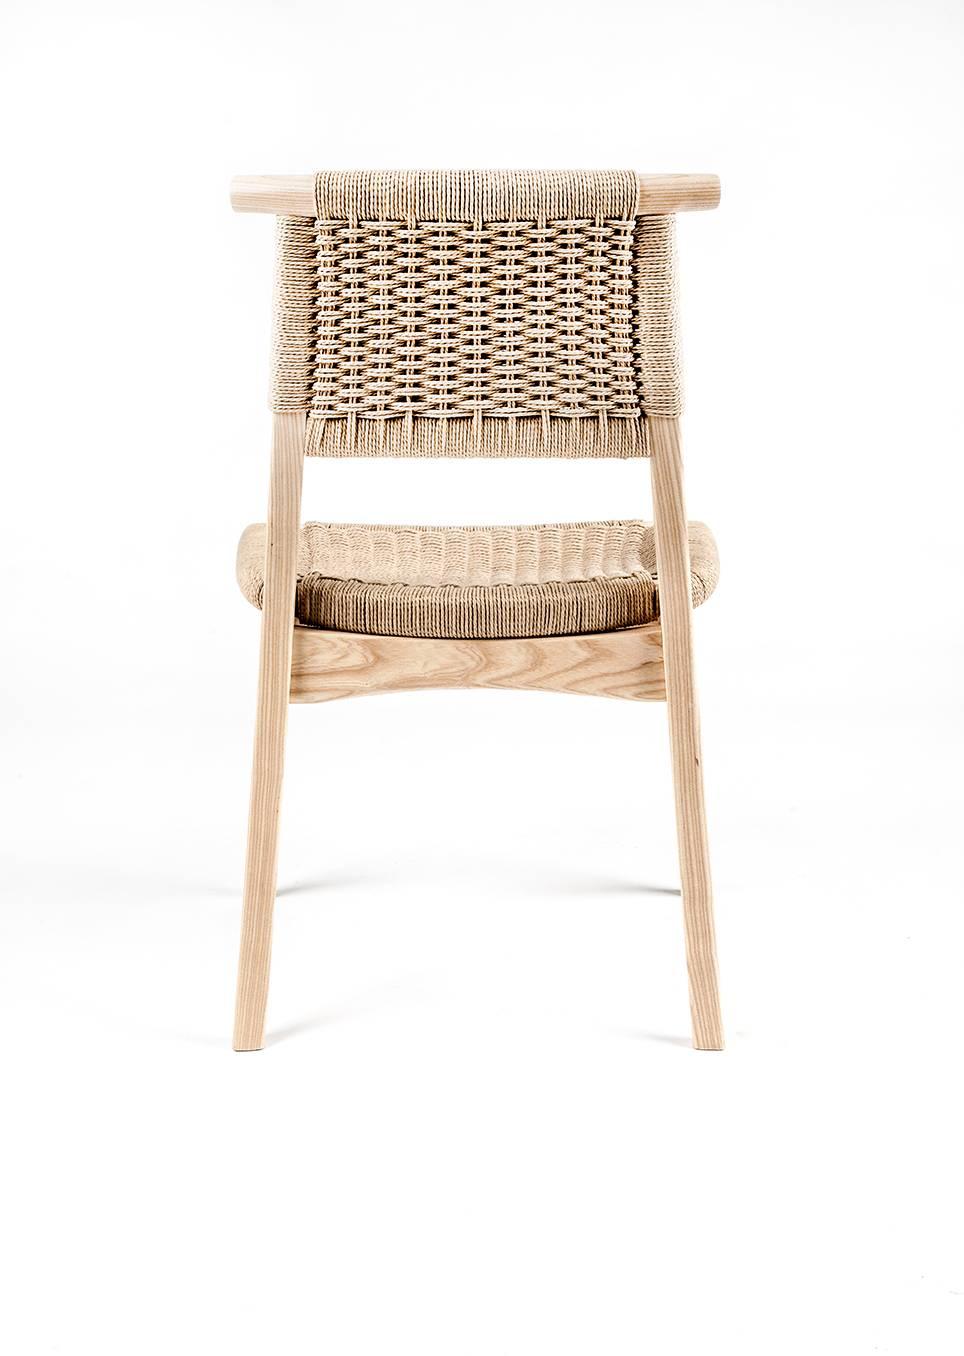 danish woven chair